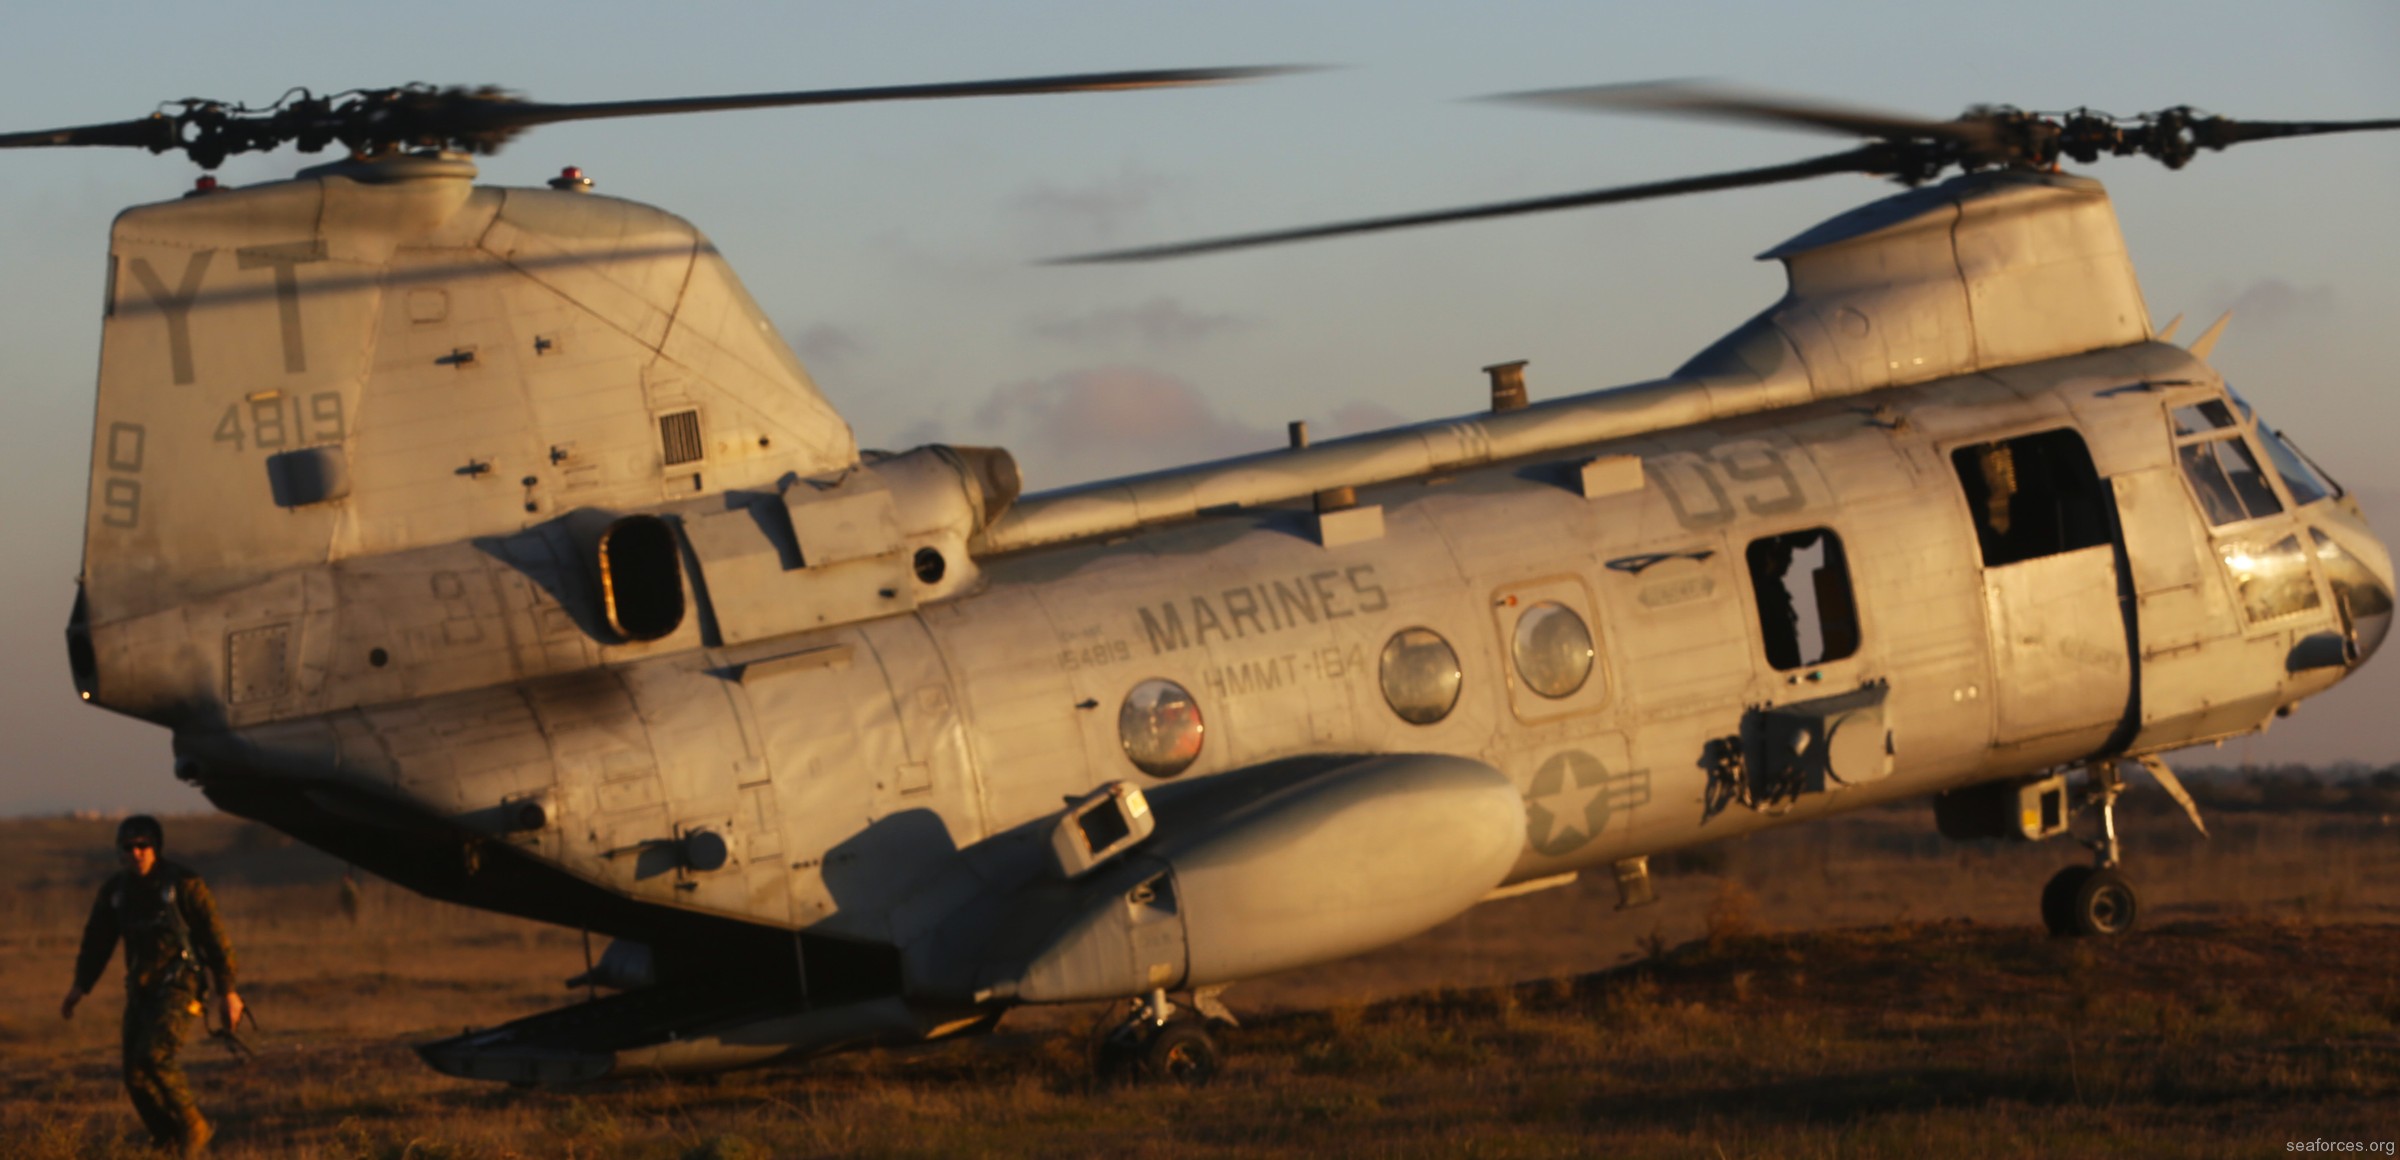 hmmt-164 knightriders ch-46 marine medium helicopter training squadron usmc 08